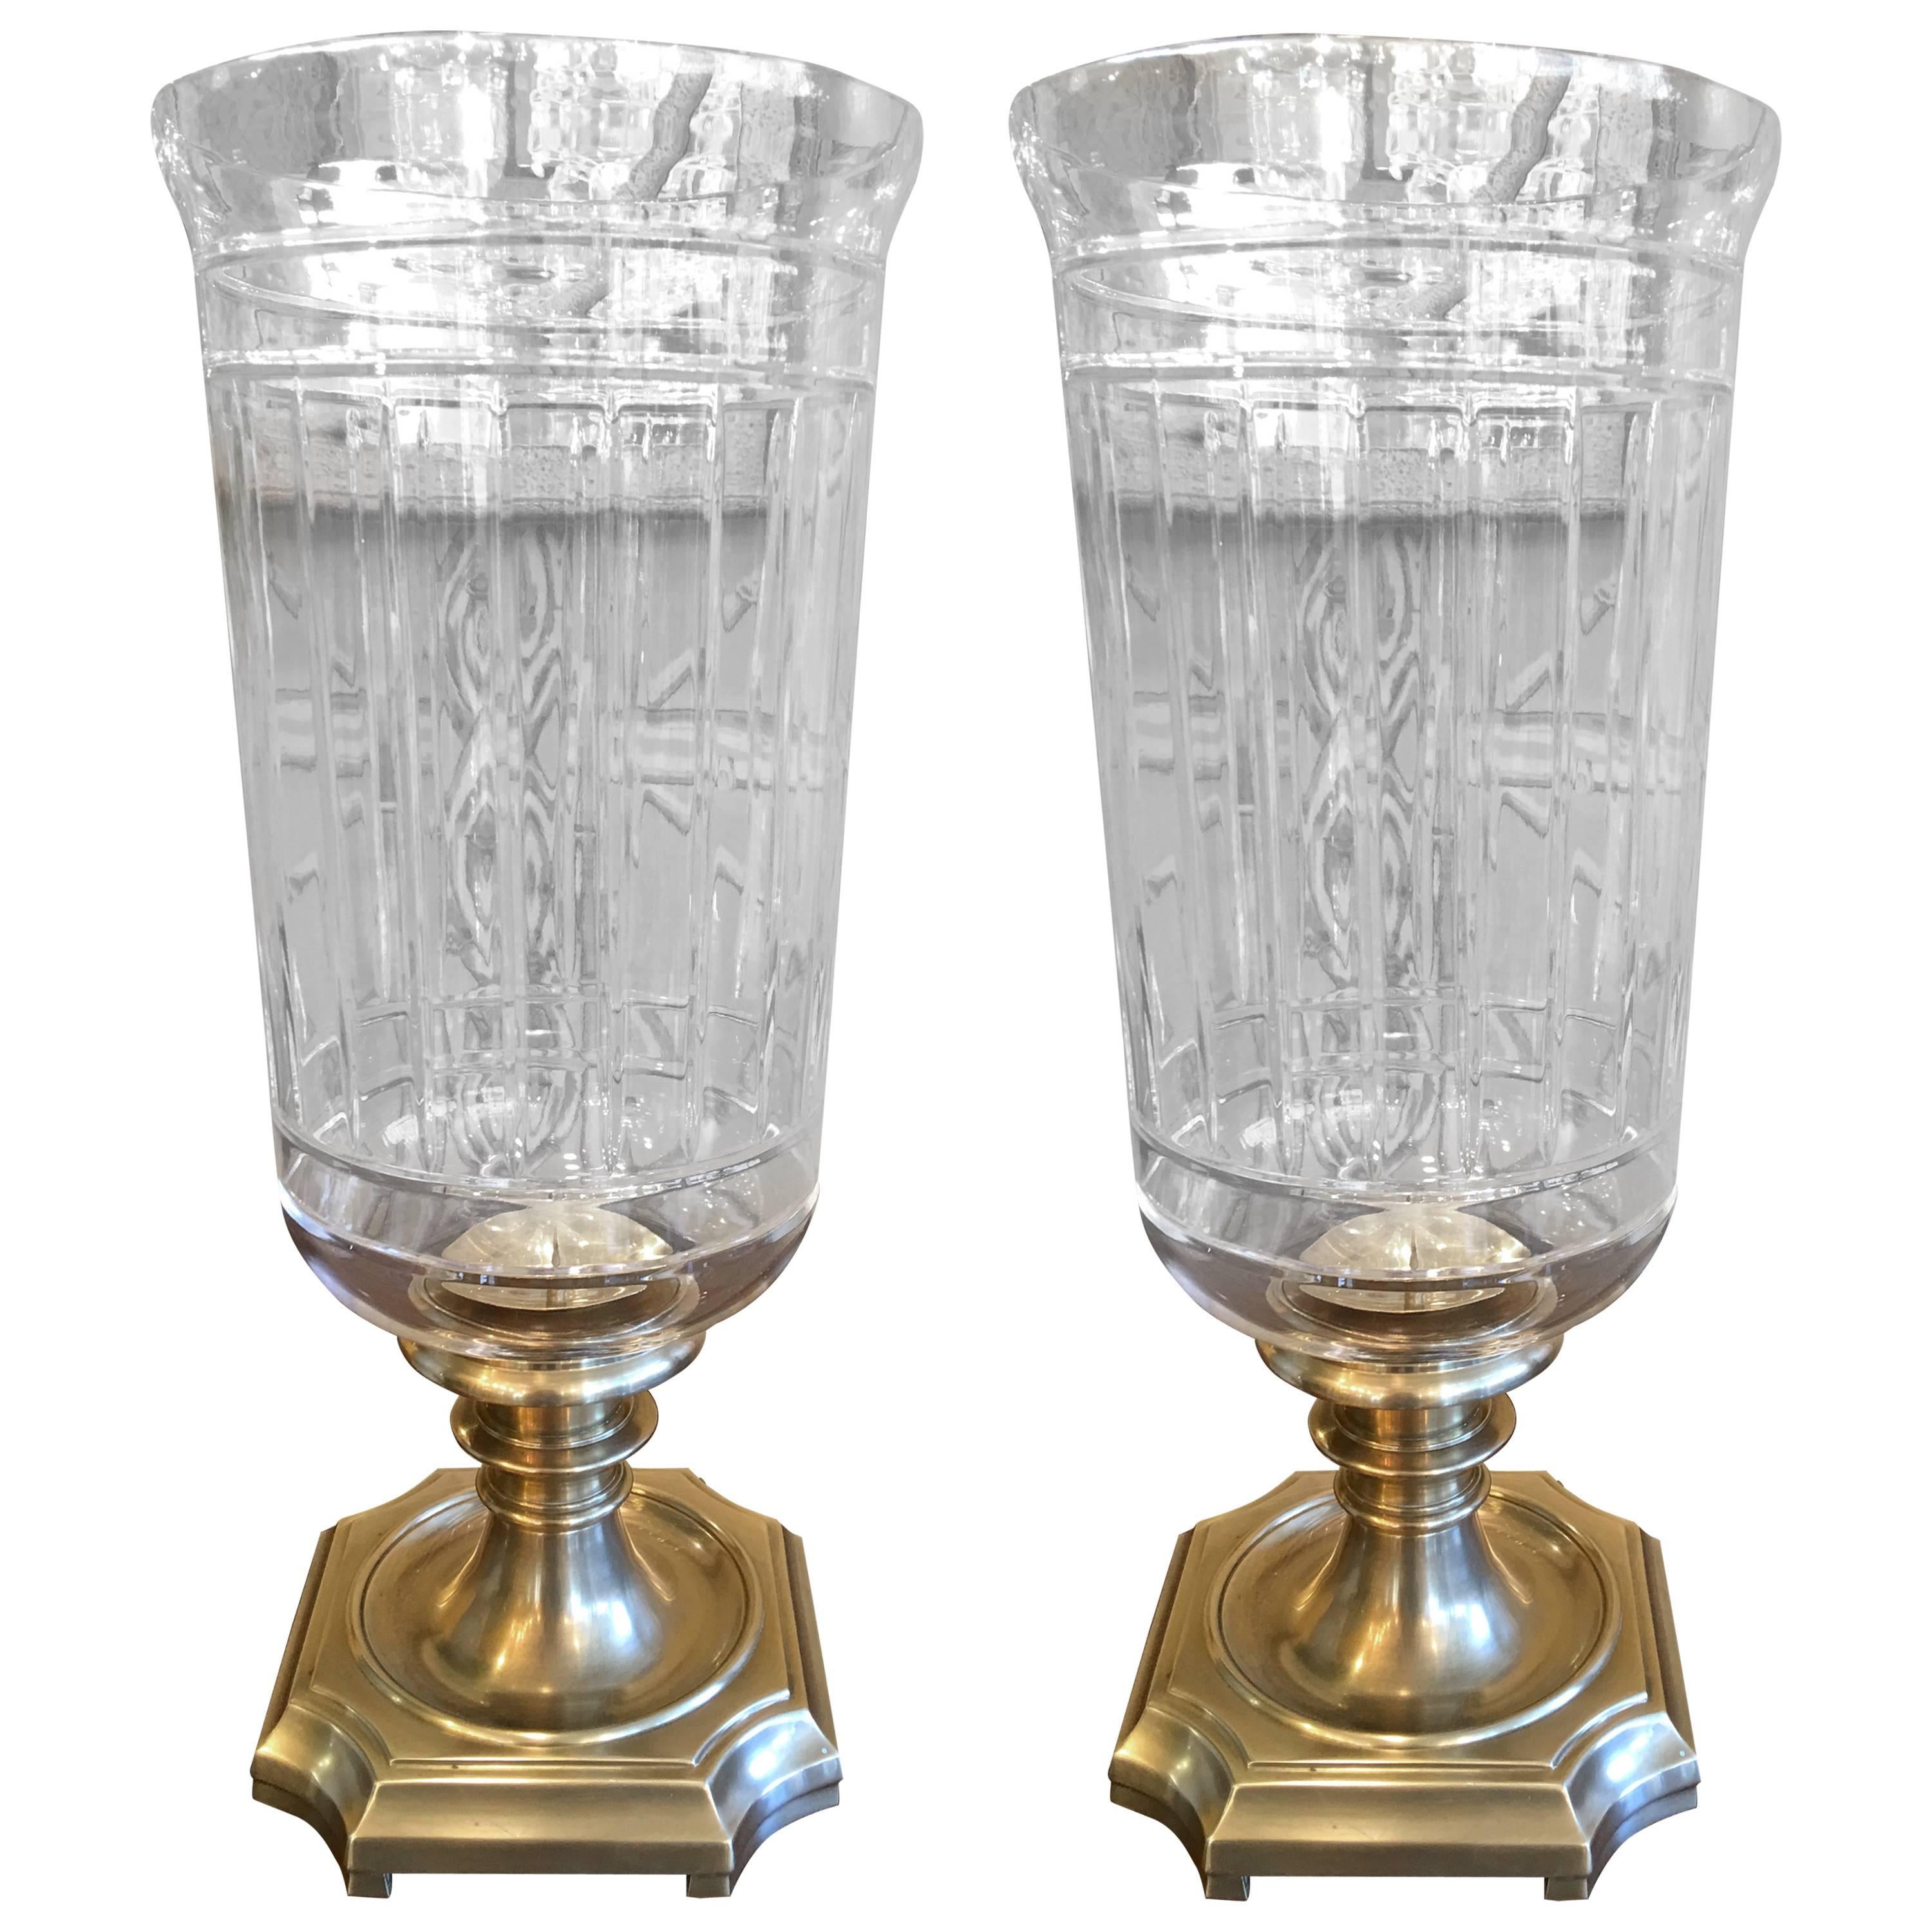 Pair of American Brass and Glass Hurricane Lanterns, circa 1960